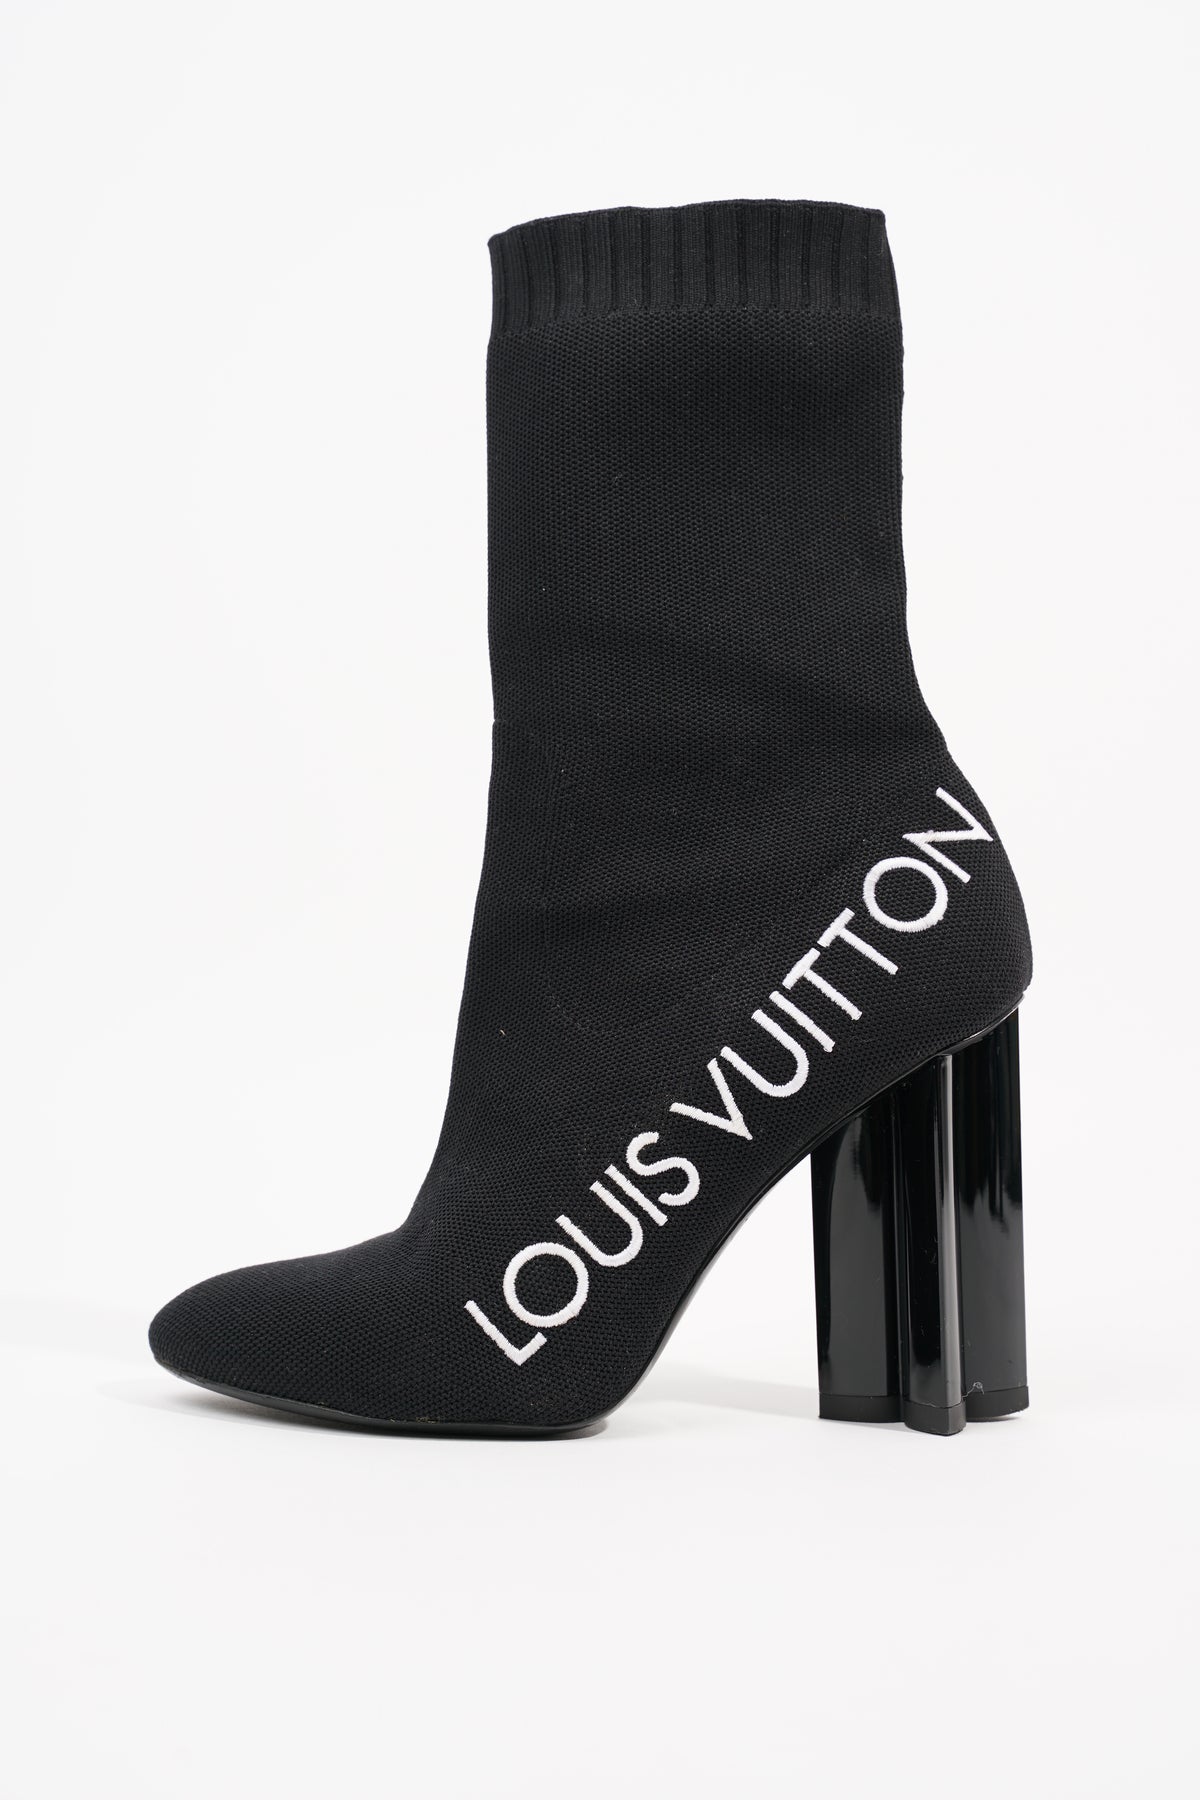 Boots Louis Vuitton Grey size 38 EU in Suede - 33708379